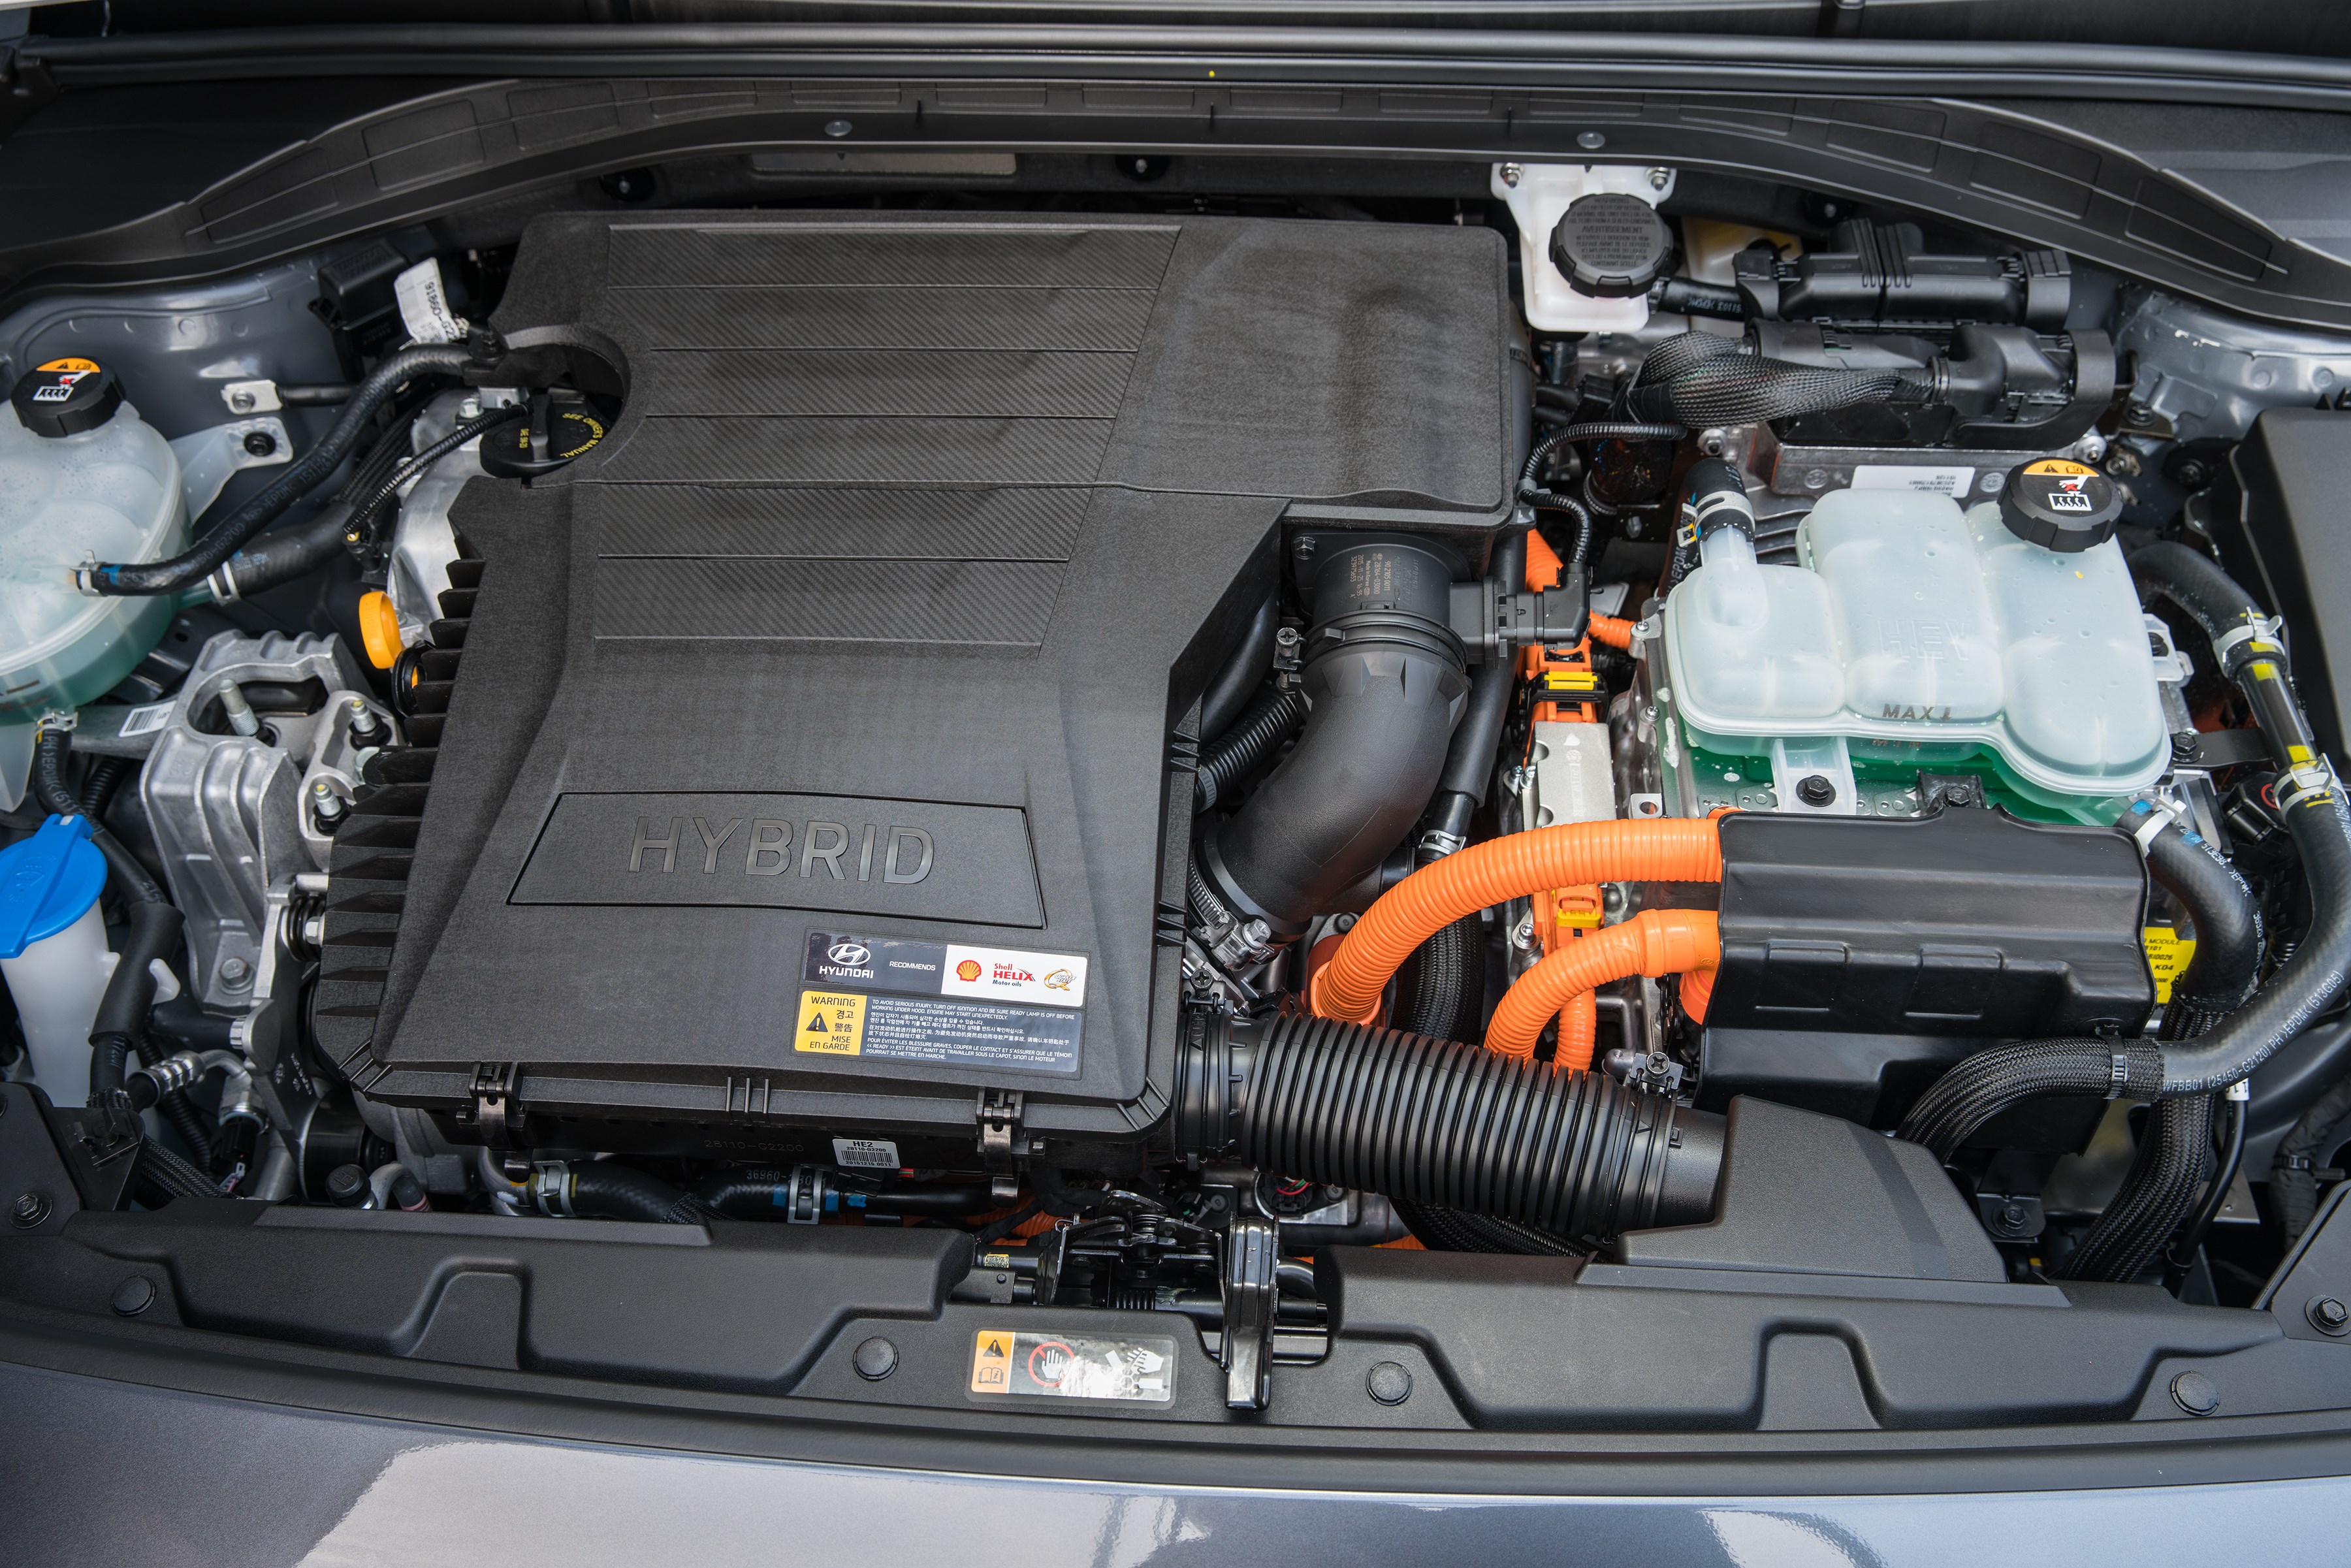 Ioniq Engine | Hyundai Introduces New Engine in Dedicated Hybrids